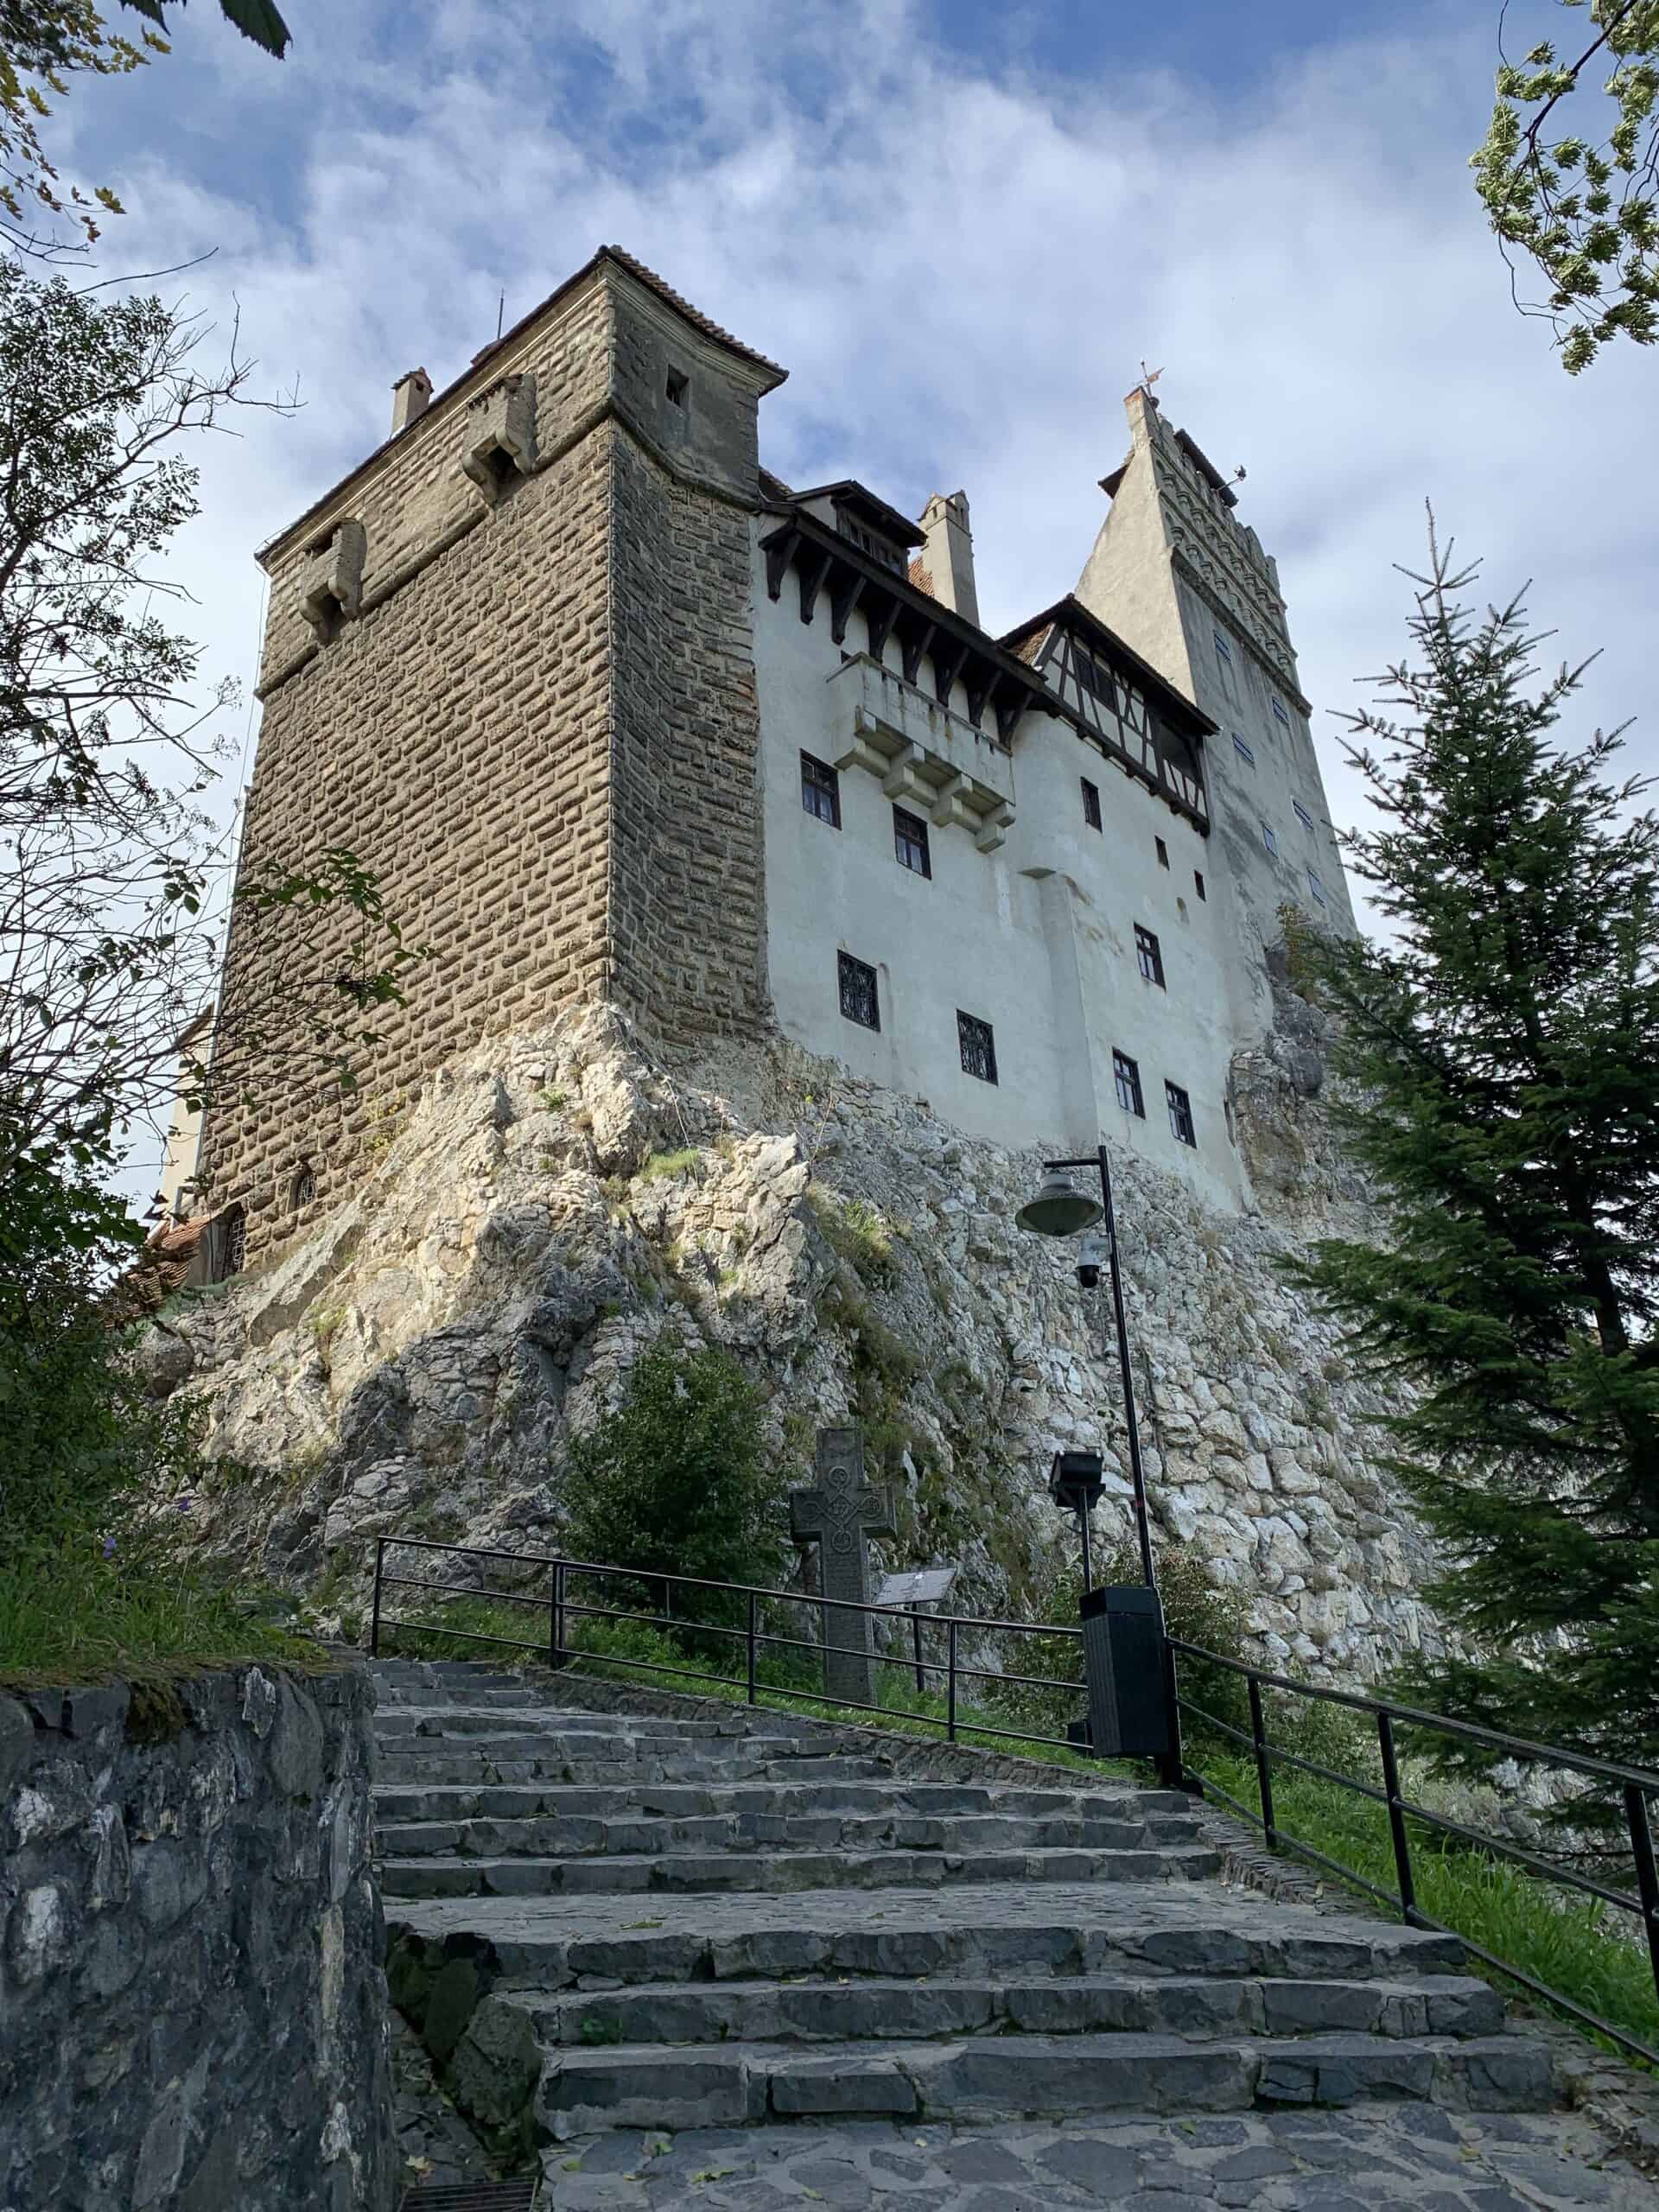 Bran Castle (Dracula’s Castle)